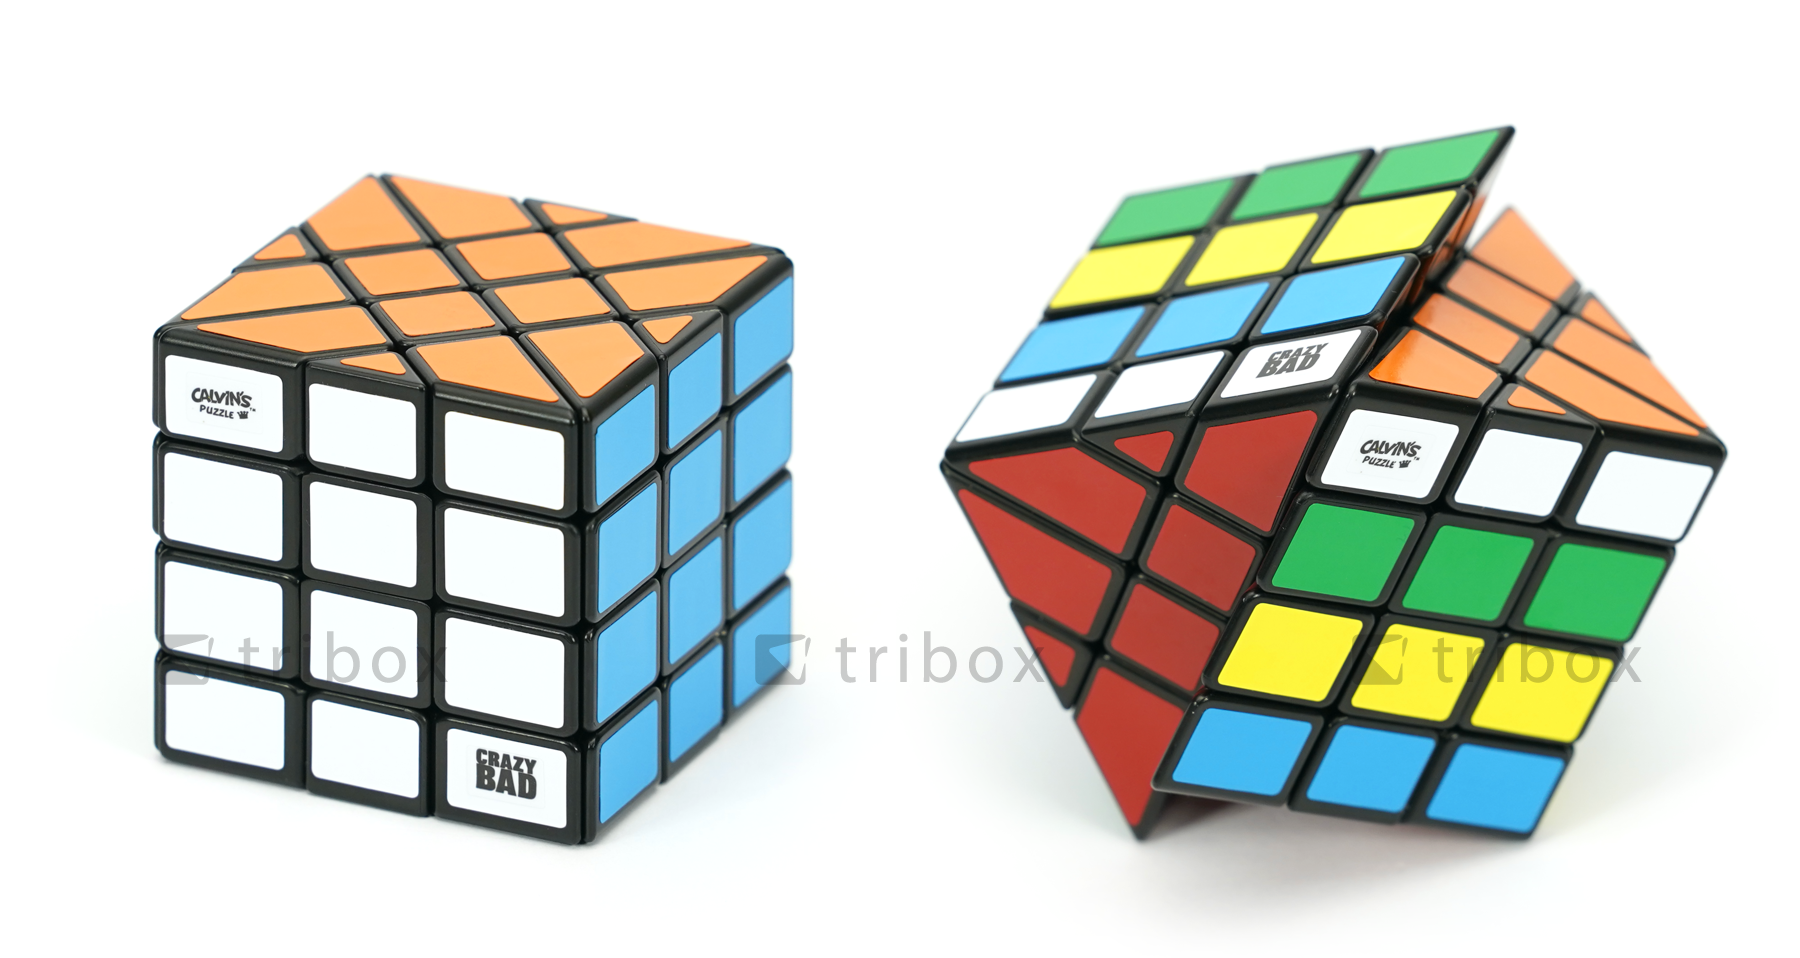 triboxストア / Calvin's CrazyBad 4x4x4 Fisher Cube